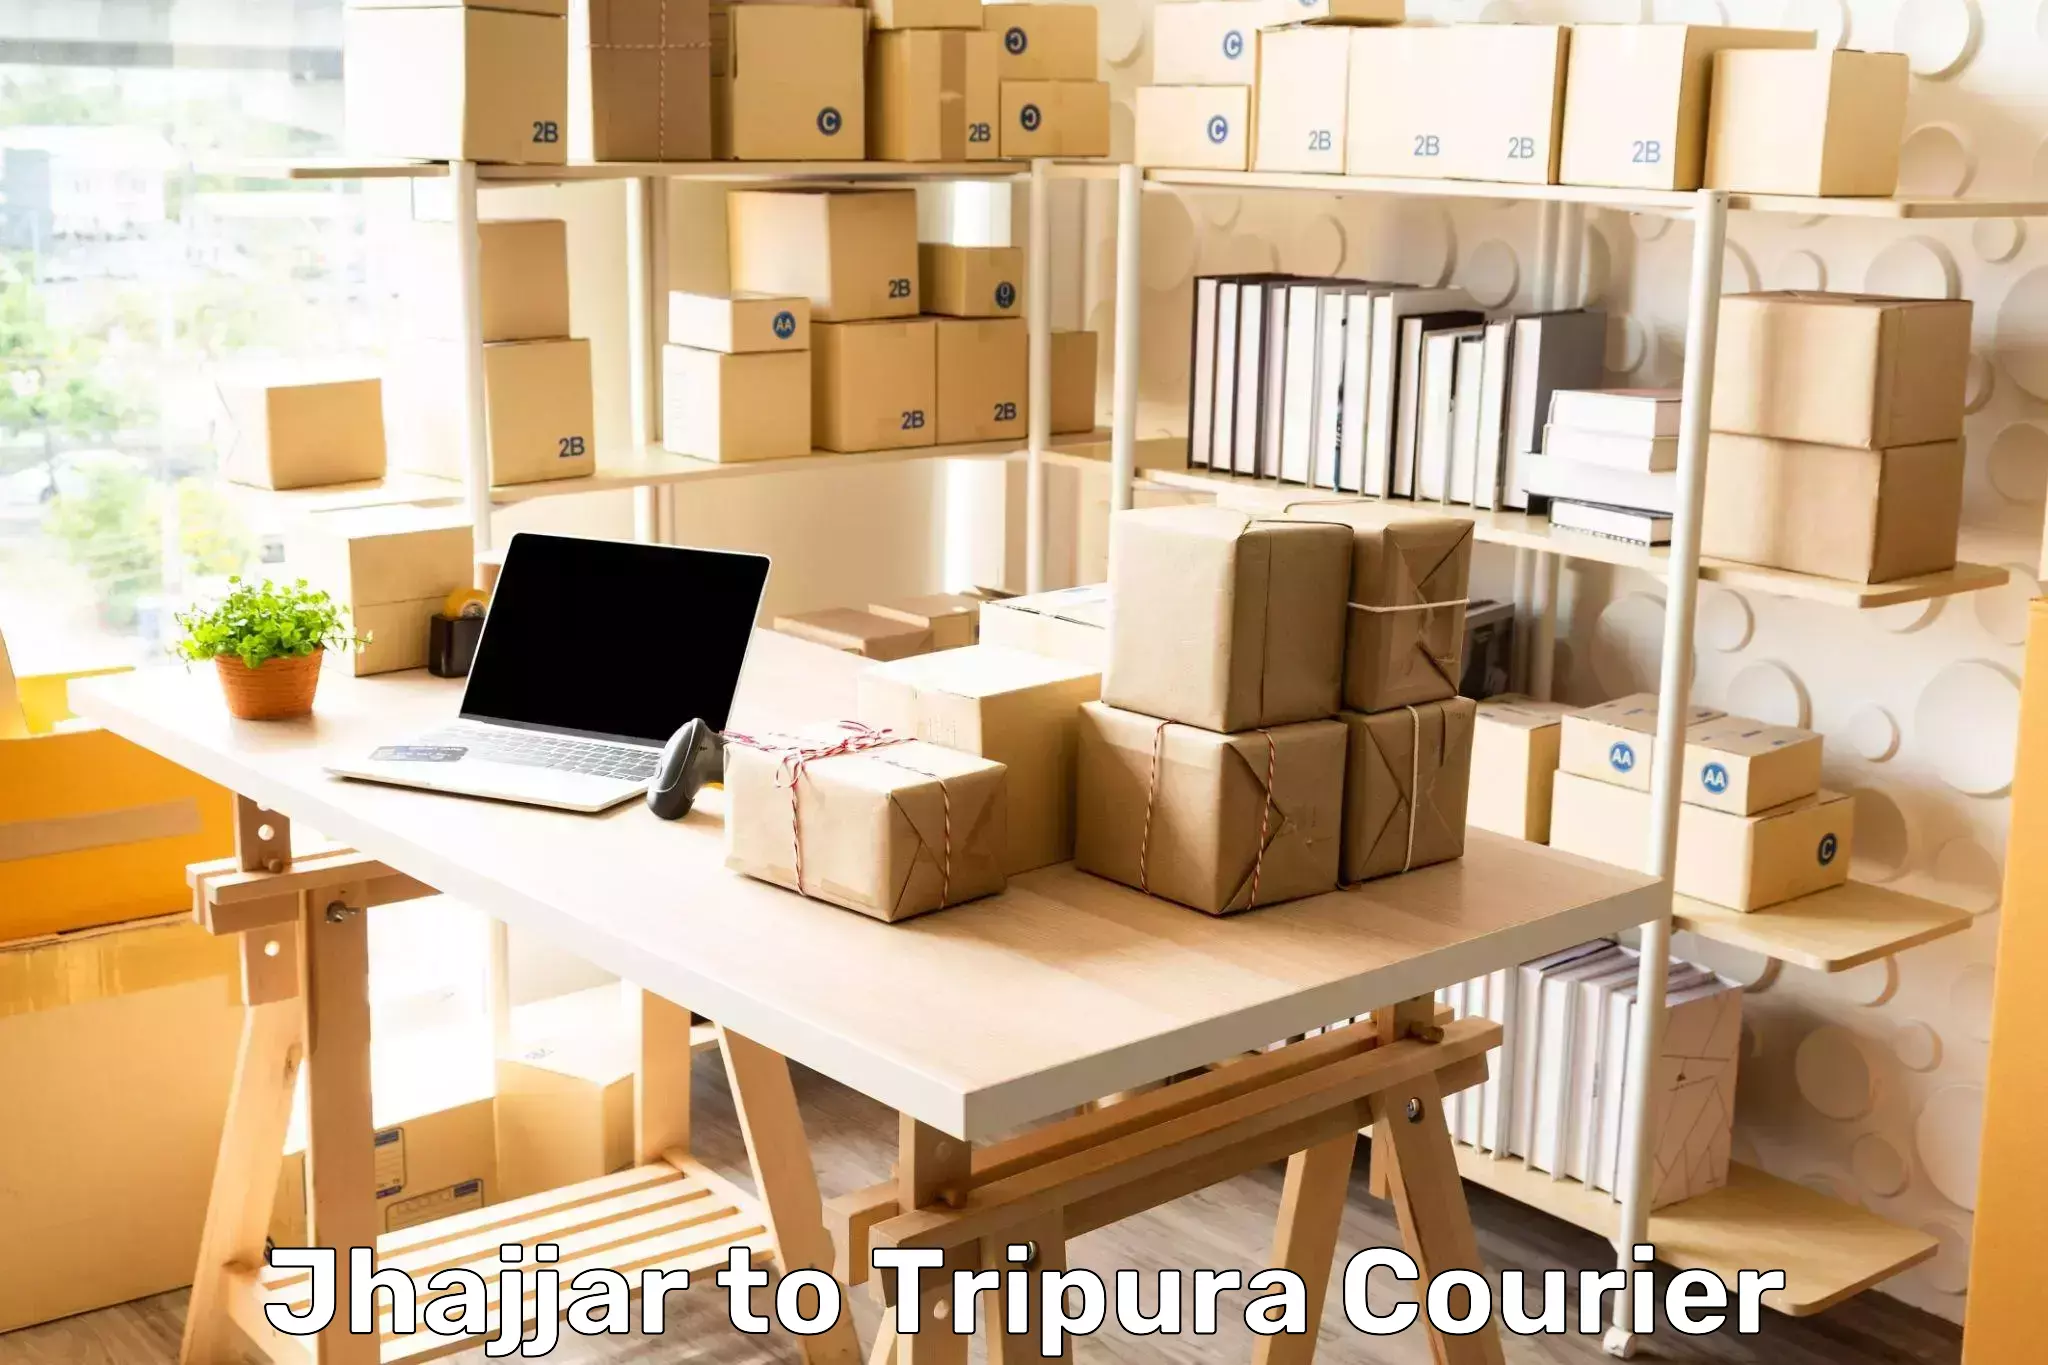 Package tracking Jhajjar to Udaipur Tripura